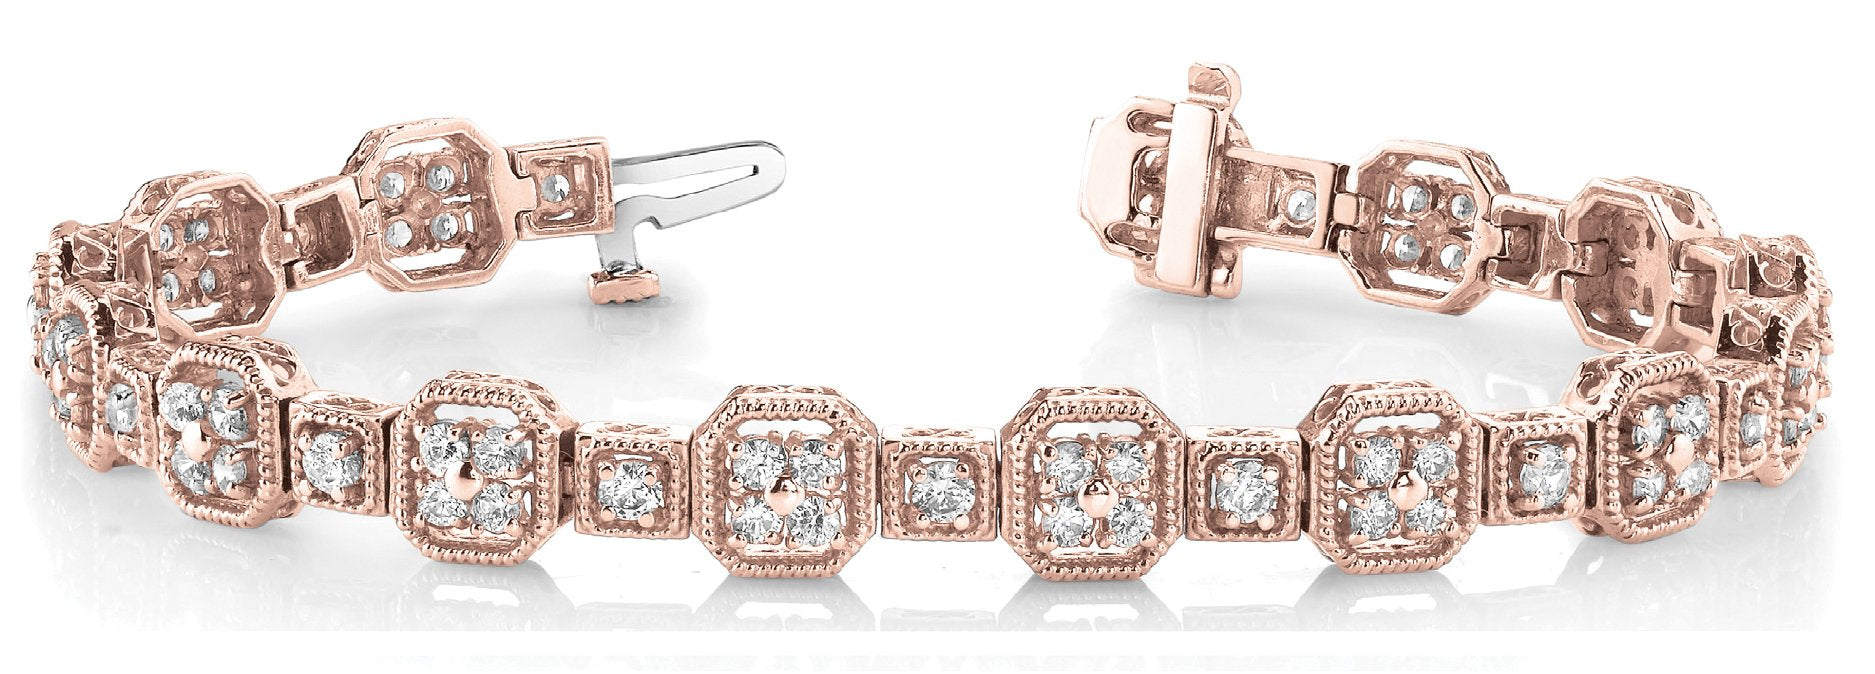 Fancy Diamond Bracelet Ladies 3.97ct tw - 14kt Rose Gold